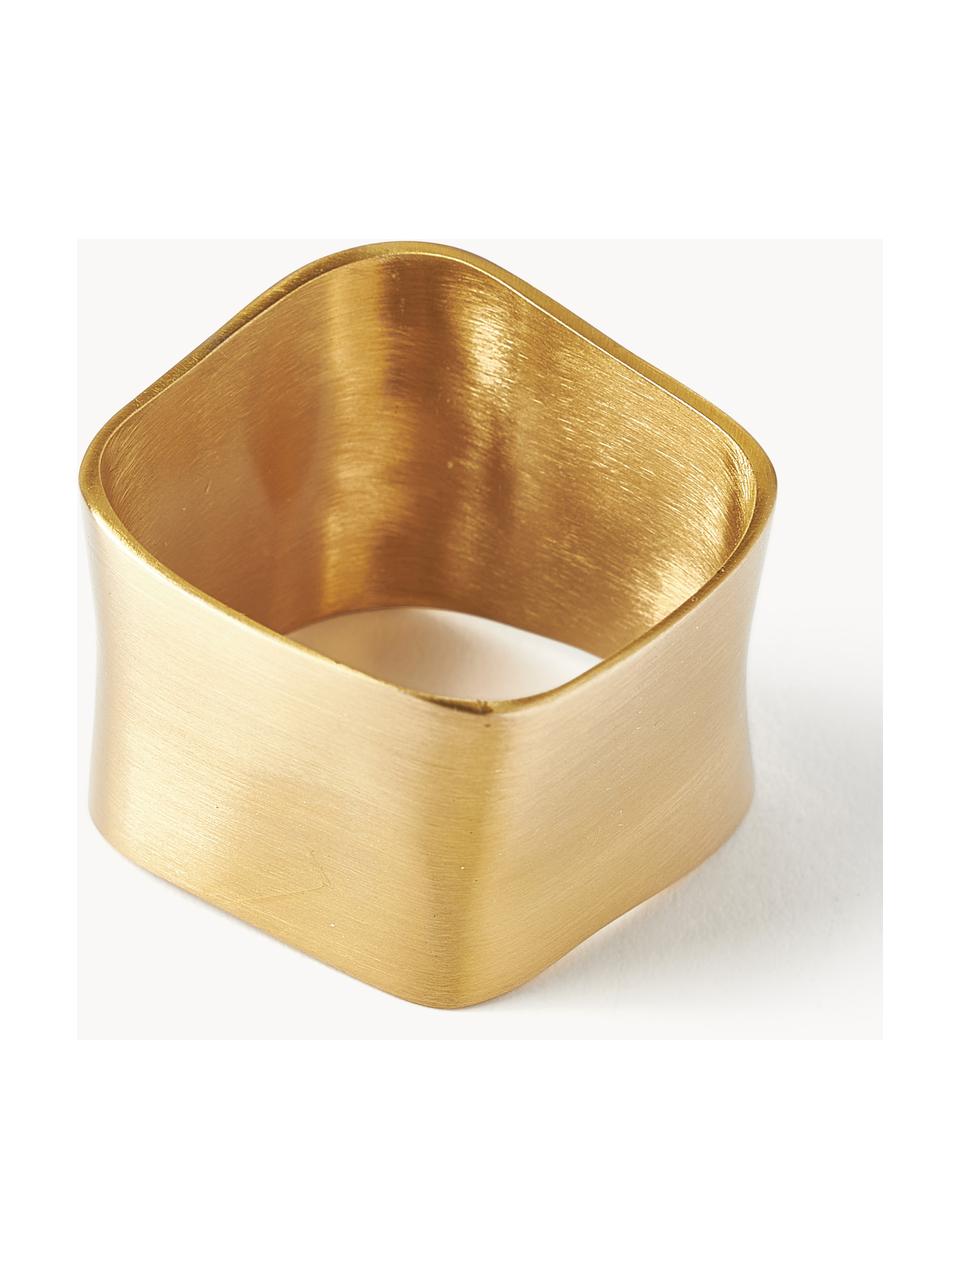 Serviettenringe Cuff, 4 Stück, Metall, beschichtet, Goldfarben, B 5 x H 4 cm